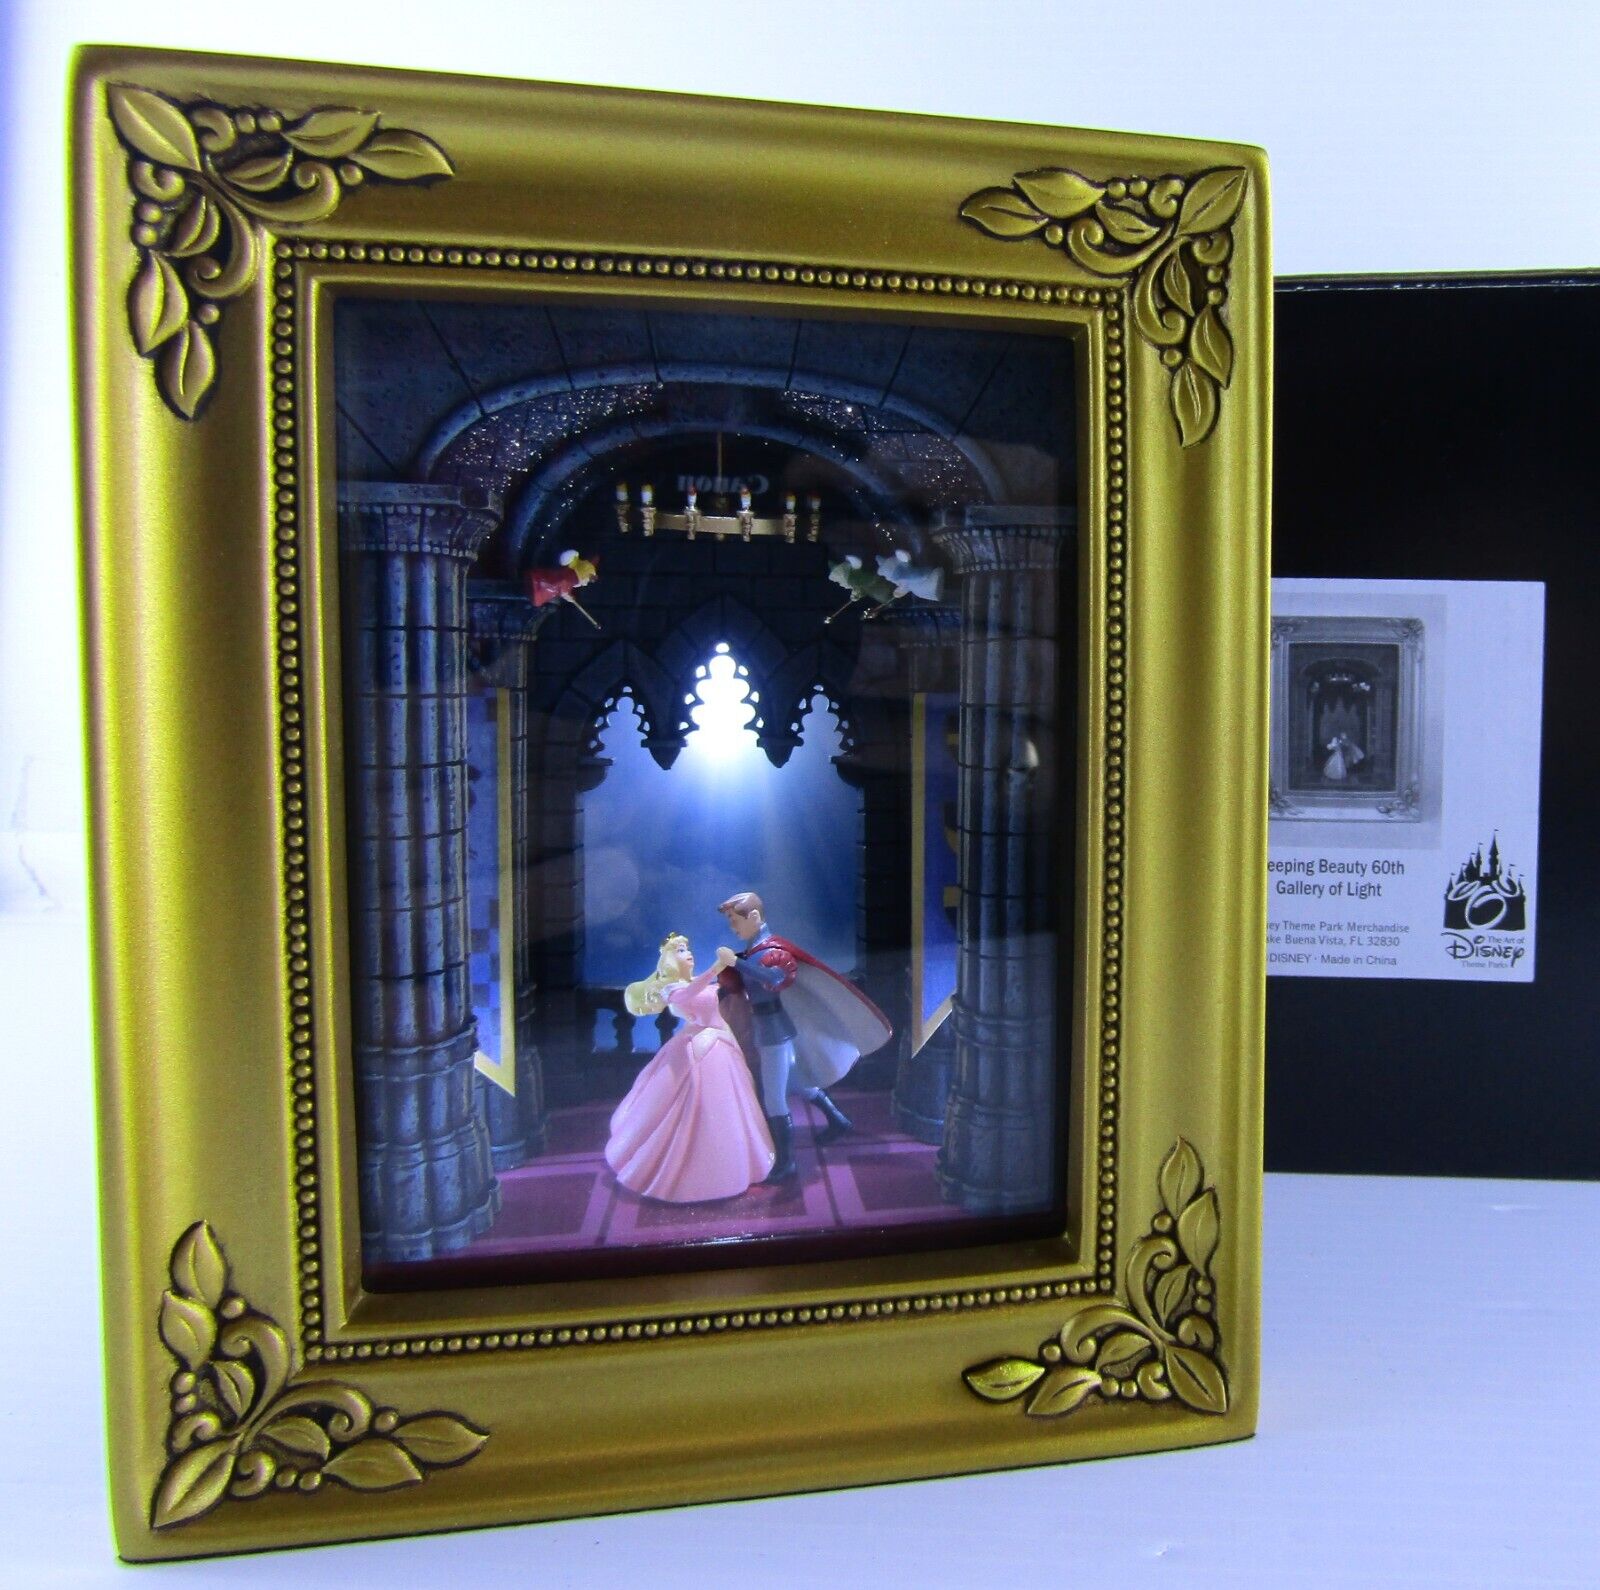 WDW Art of Disney, Sleeping Beauty 60th Anniversary Gallery Light Box, Olszewski